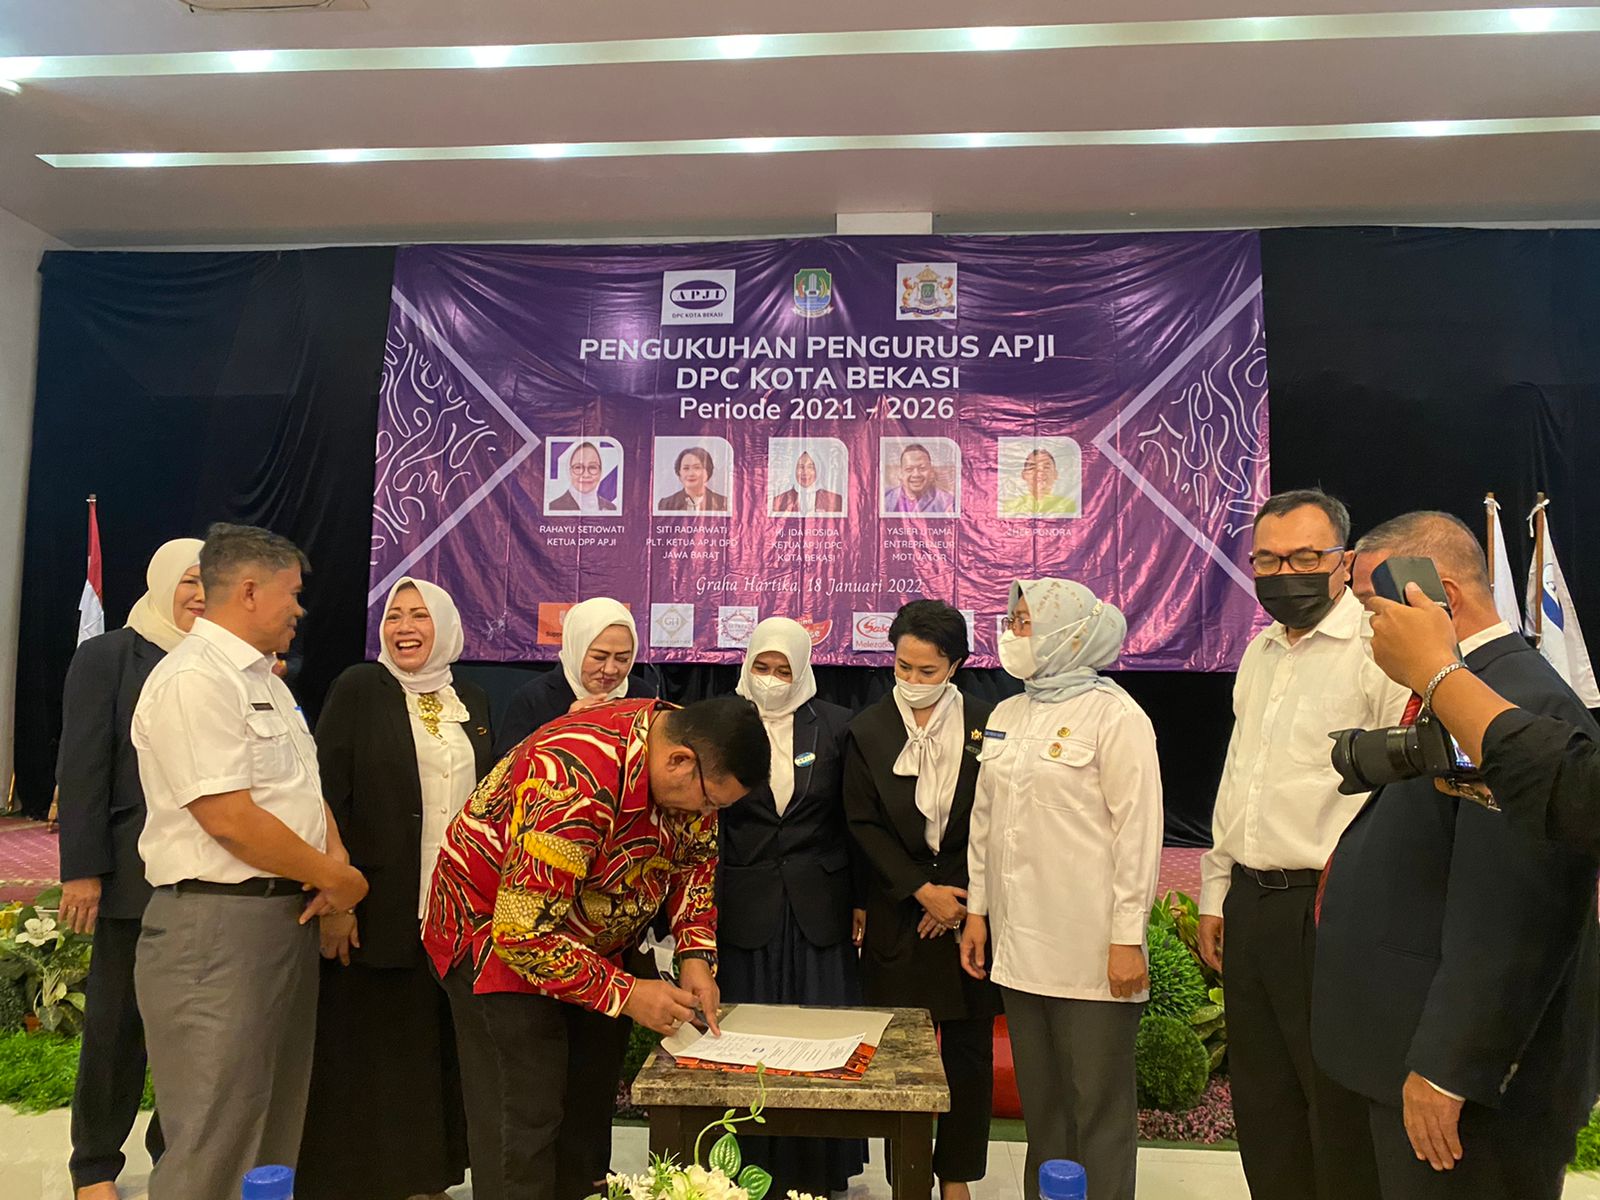 Pengukuhan Pengurus Asosiasi Pengusaha Jasa Boga Indonesia Dewan Pimpinan Cabang Kota Bekasi Periode 2021-20264